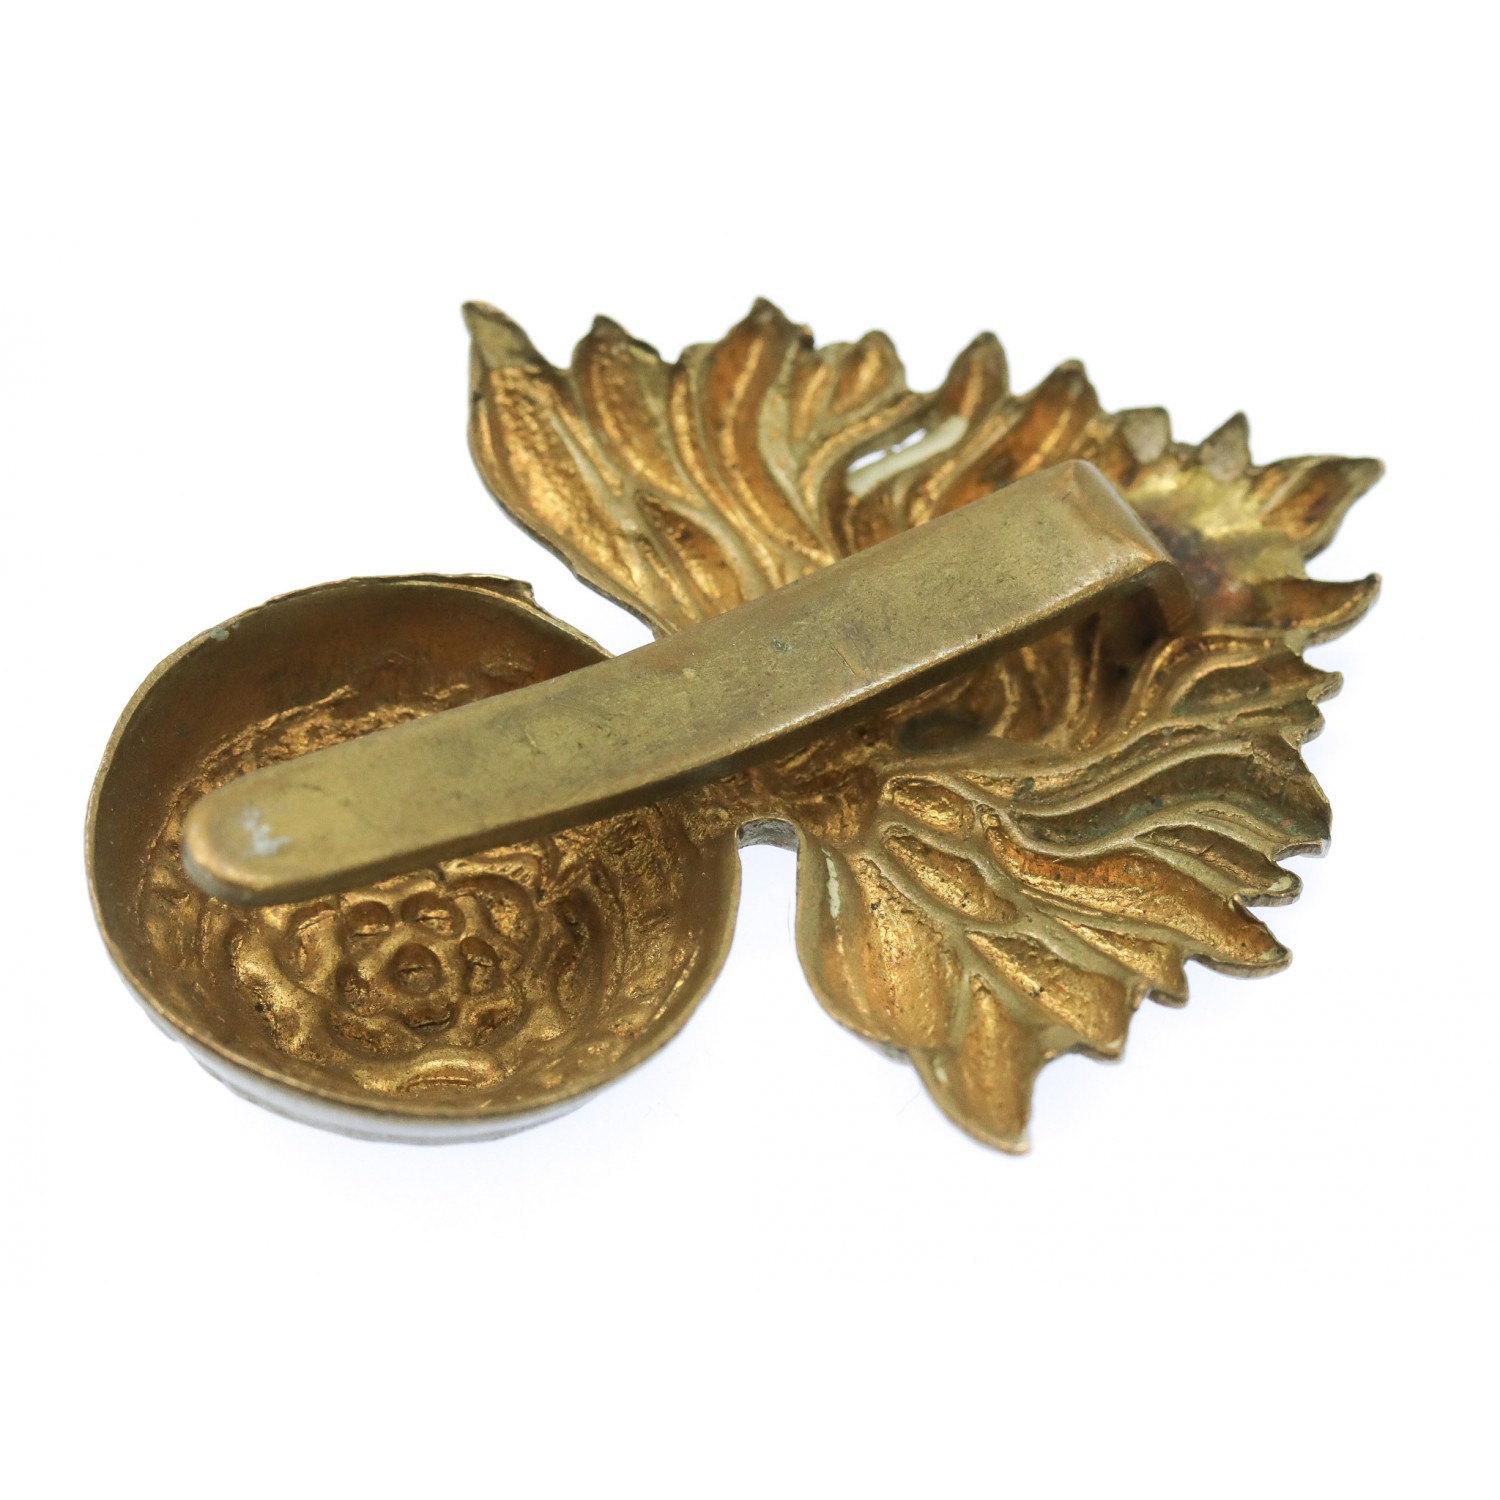 Royal Fusiliers Cap Badge - King's Crown